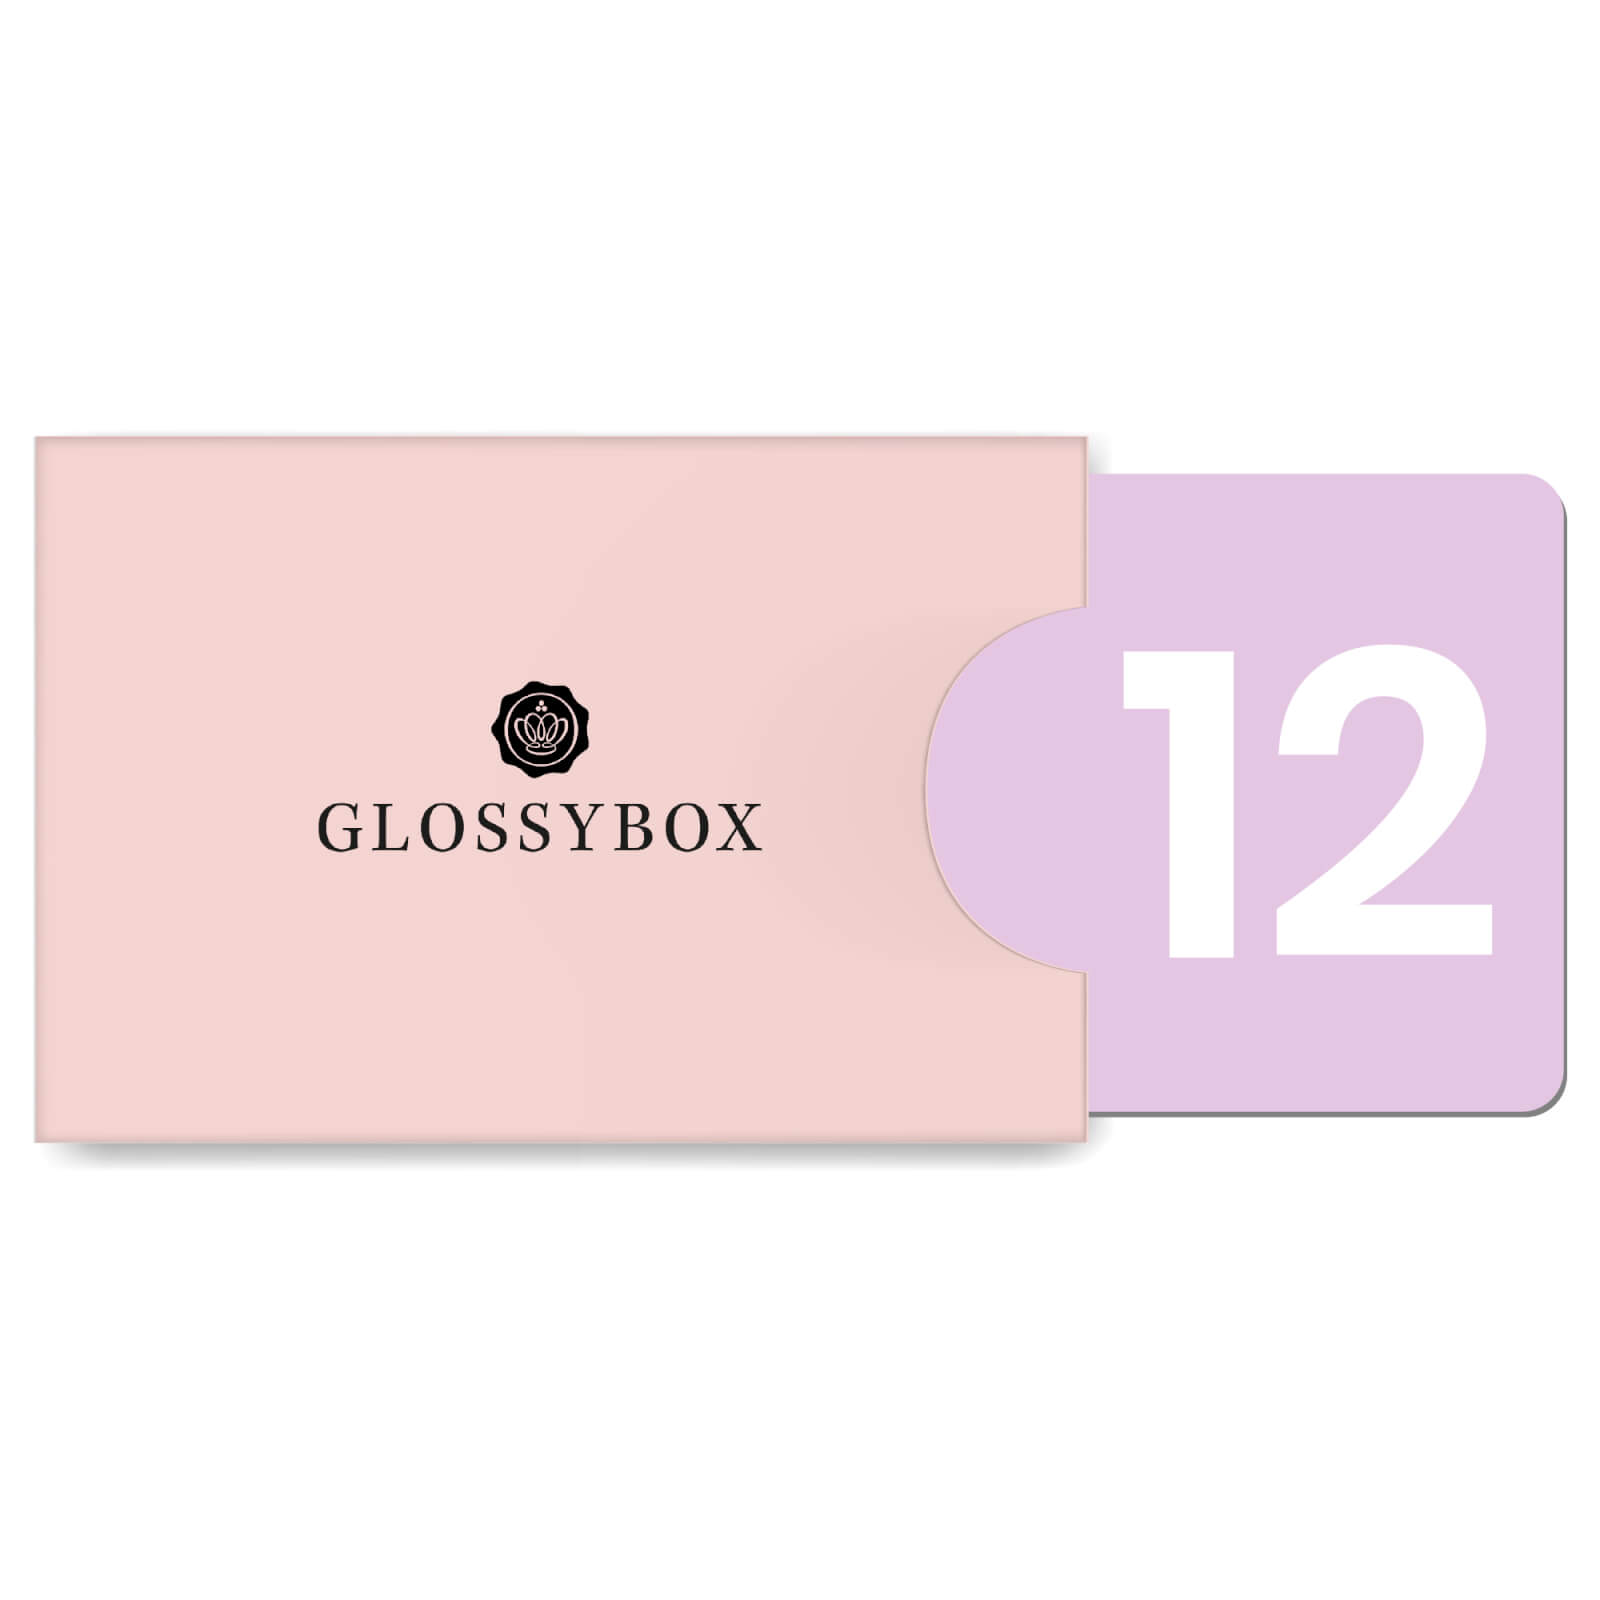 Glossy Box coupon: GLOSSYBOX eGift Voucher - 12 Month Plan